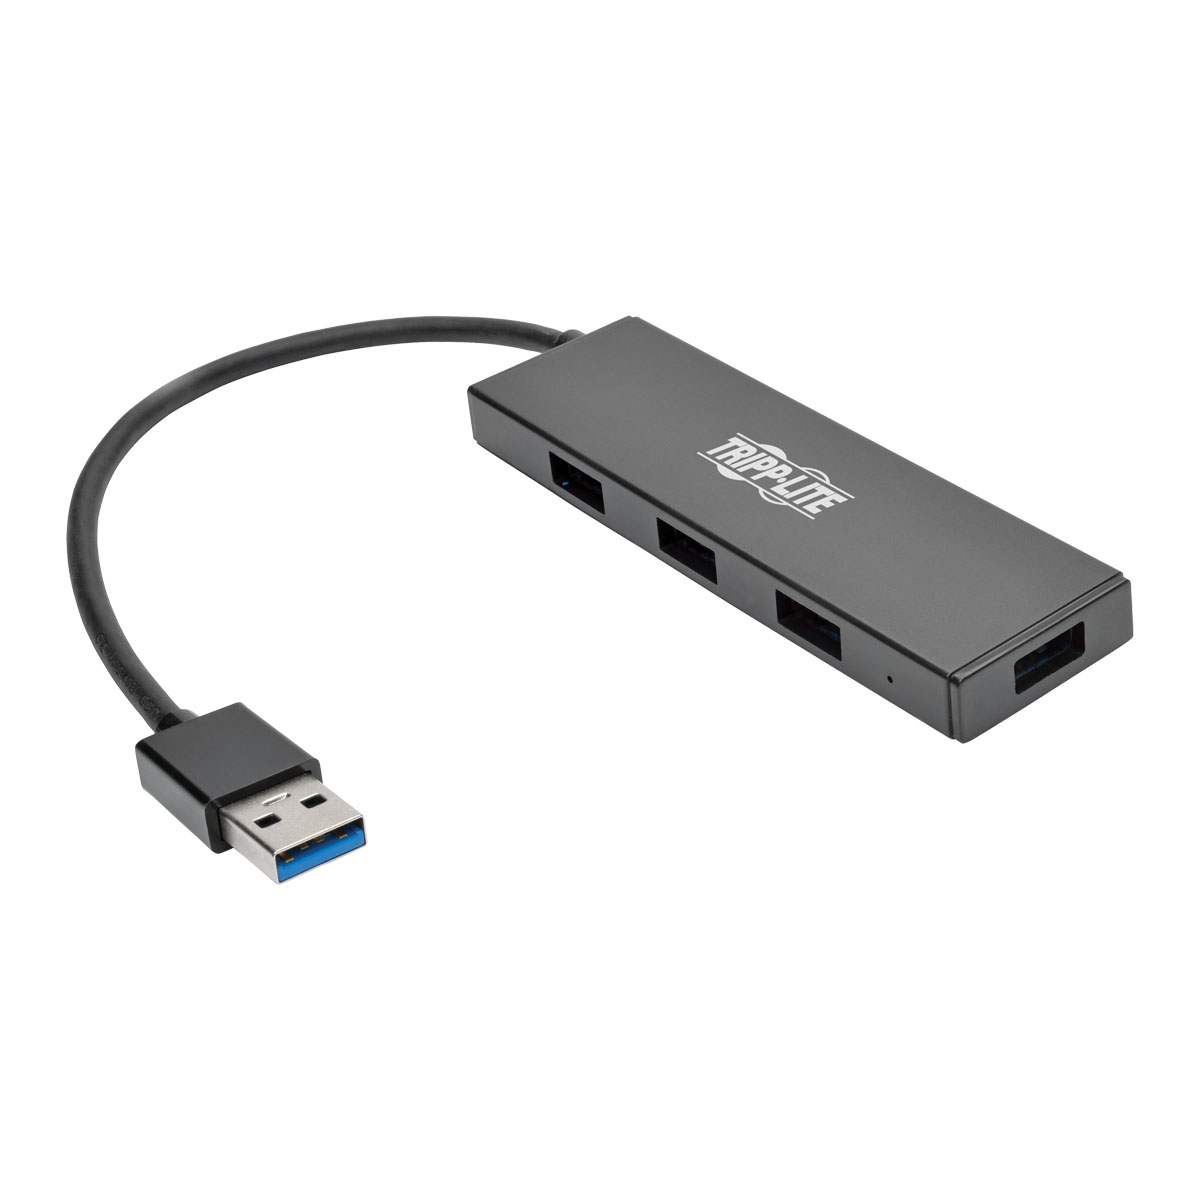 Buy Port Connect 4 Port USB Hub, USB hubs